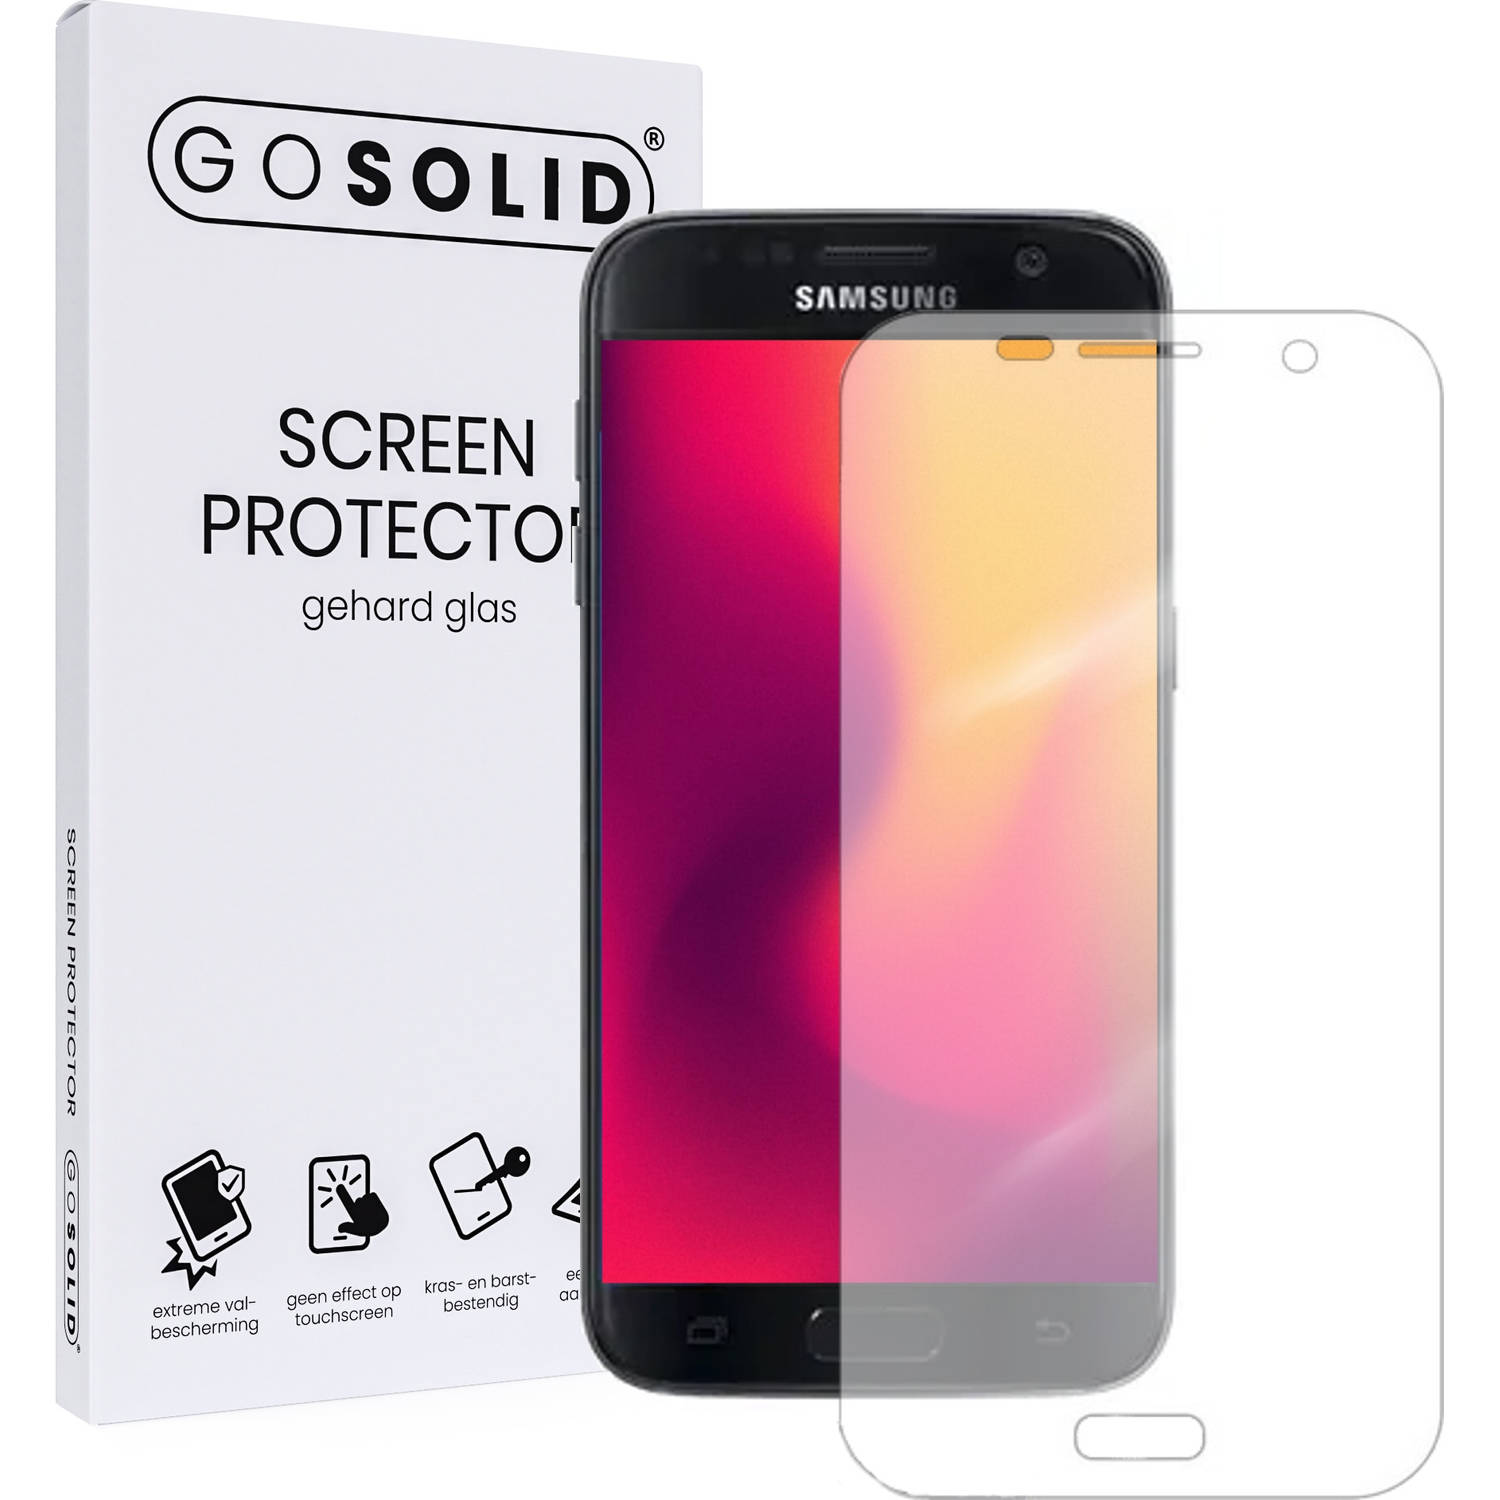 Go Solid! Samsung Galaxy S5 Mini Screenprotector Gehard Glas